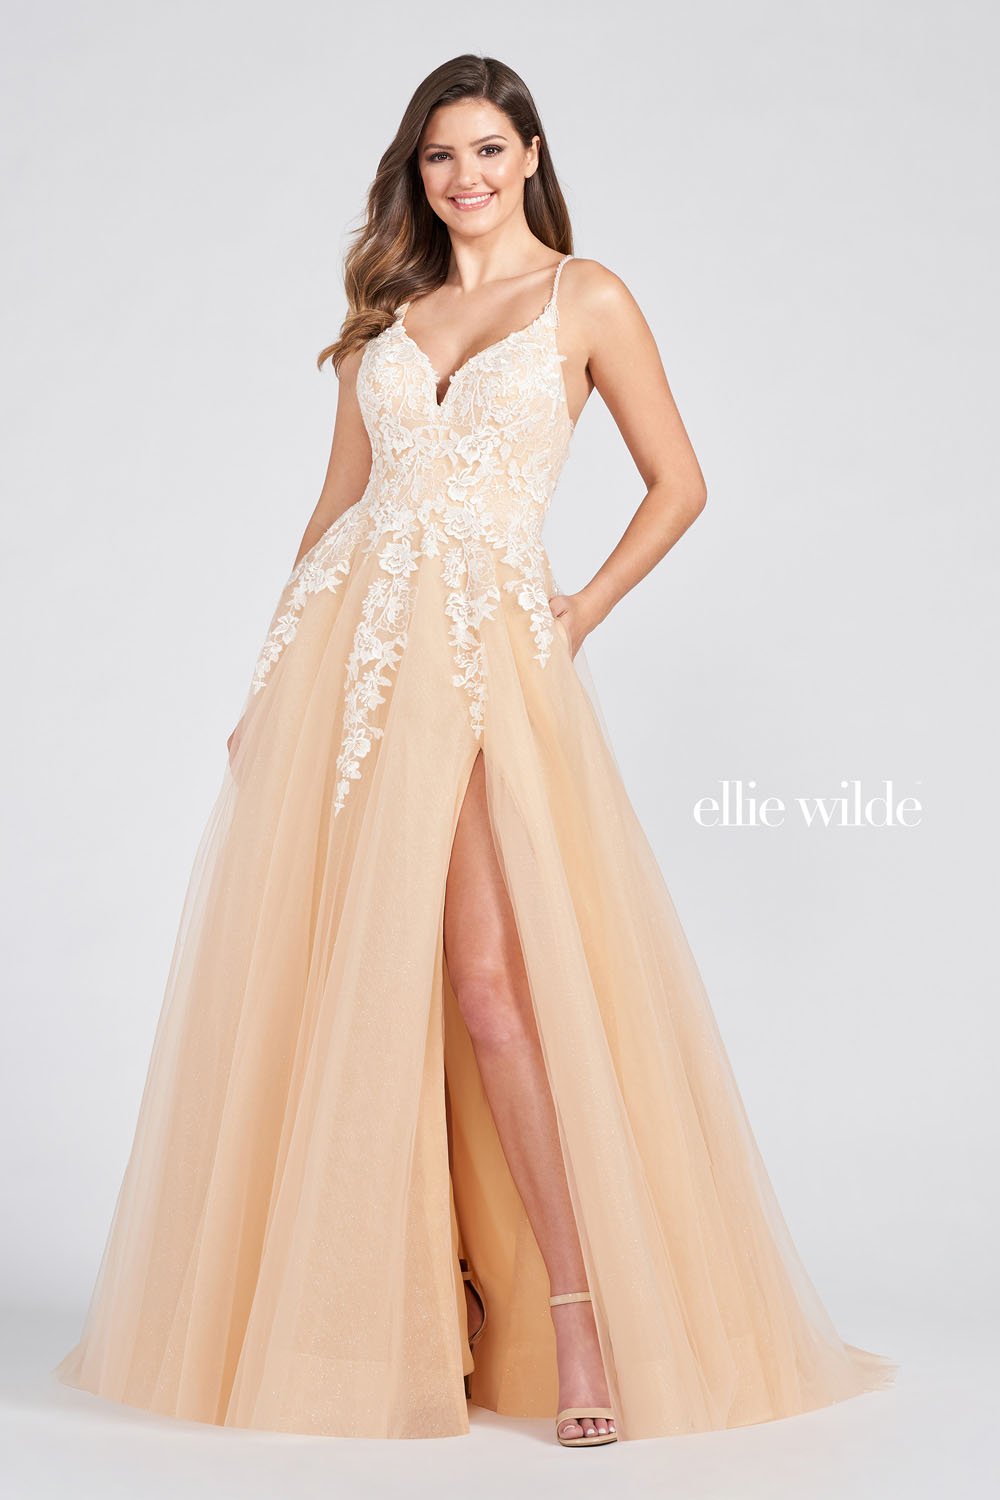 Ellie Wilde Yellow EW122014 Prom Dress Image.  Yellow formal dress.